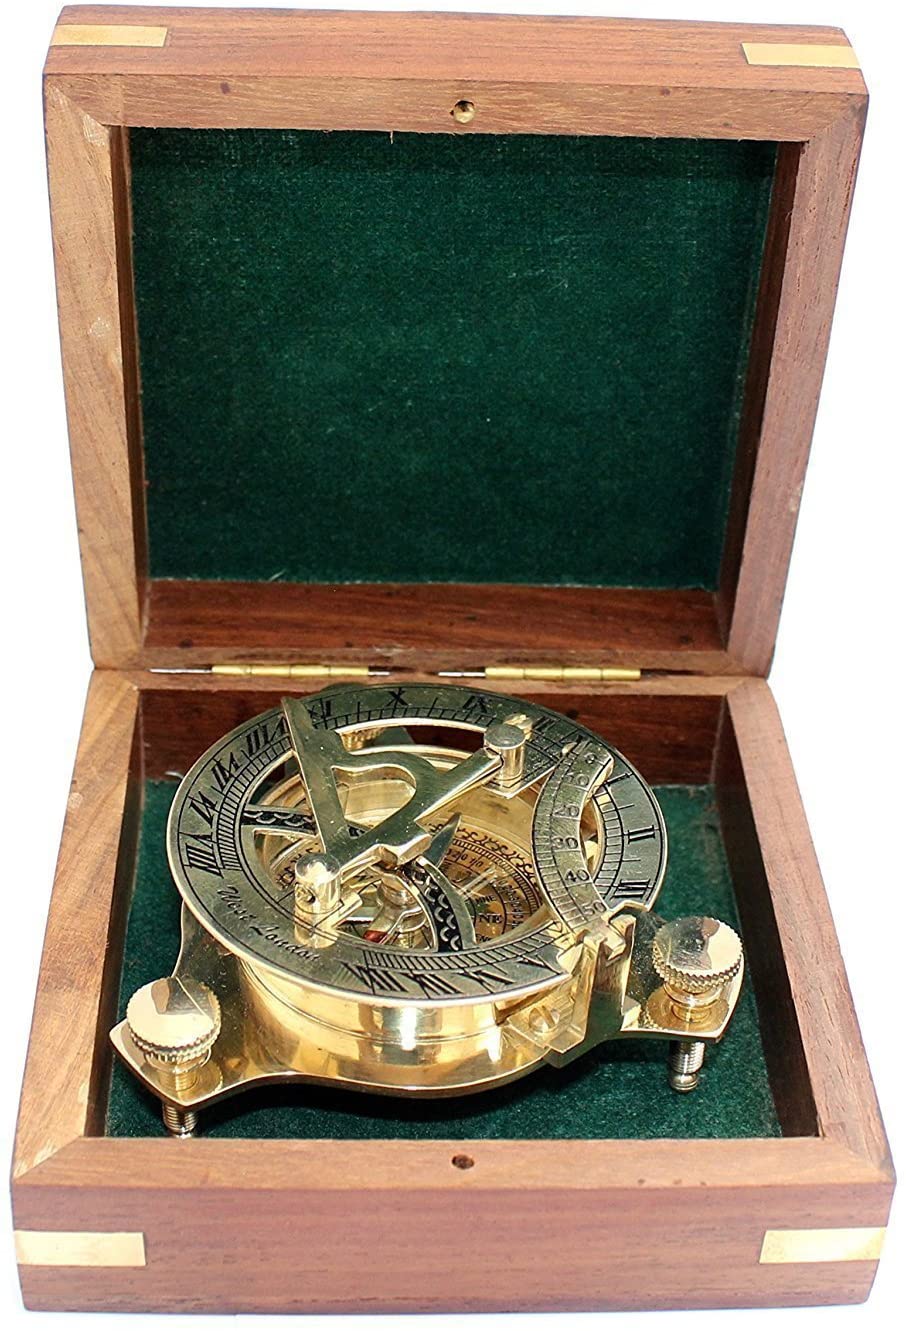 Vintage Marine Brass Sundial Antique Compass w/Wooden Box Old London Sailor Gift 